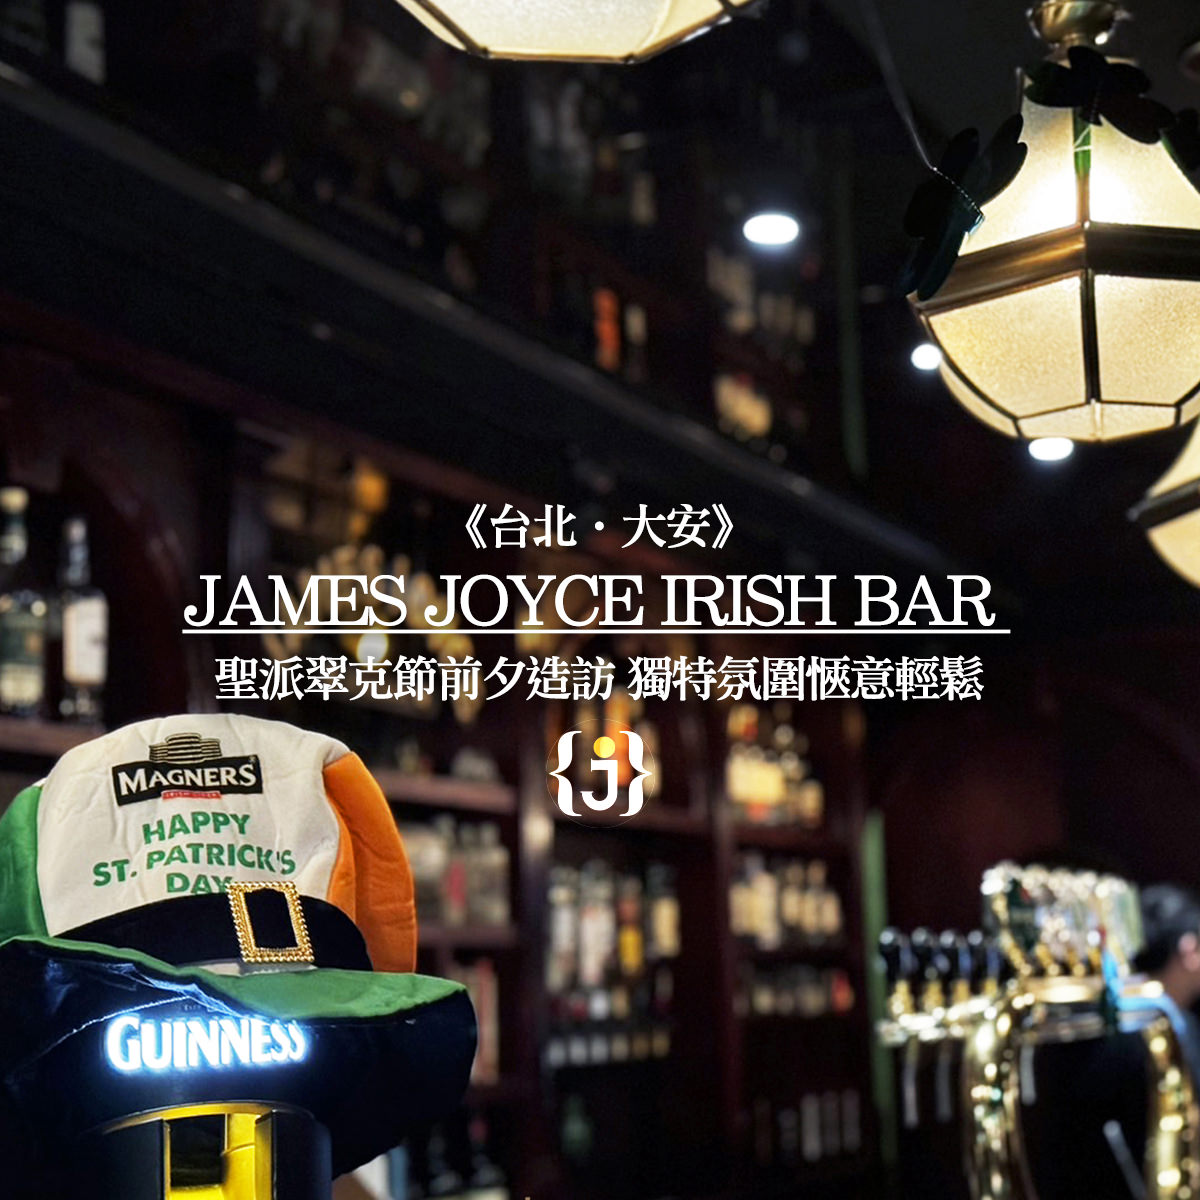 James Joyce Irish Bar 聖派翠克節前夕造訪 獨特氛圍愜意輕鬆